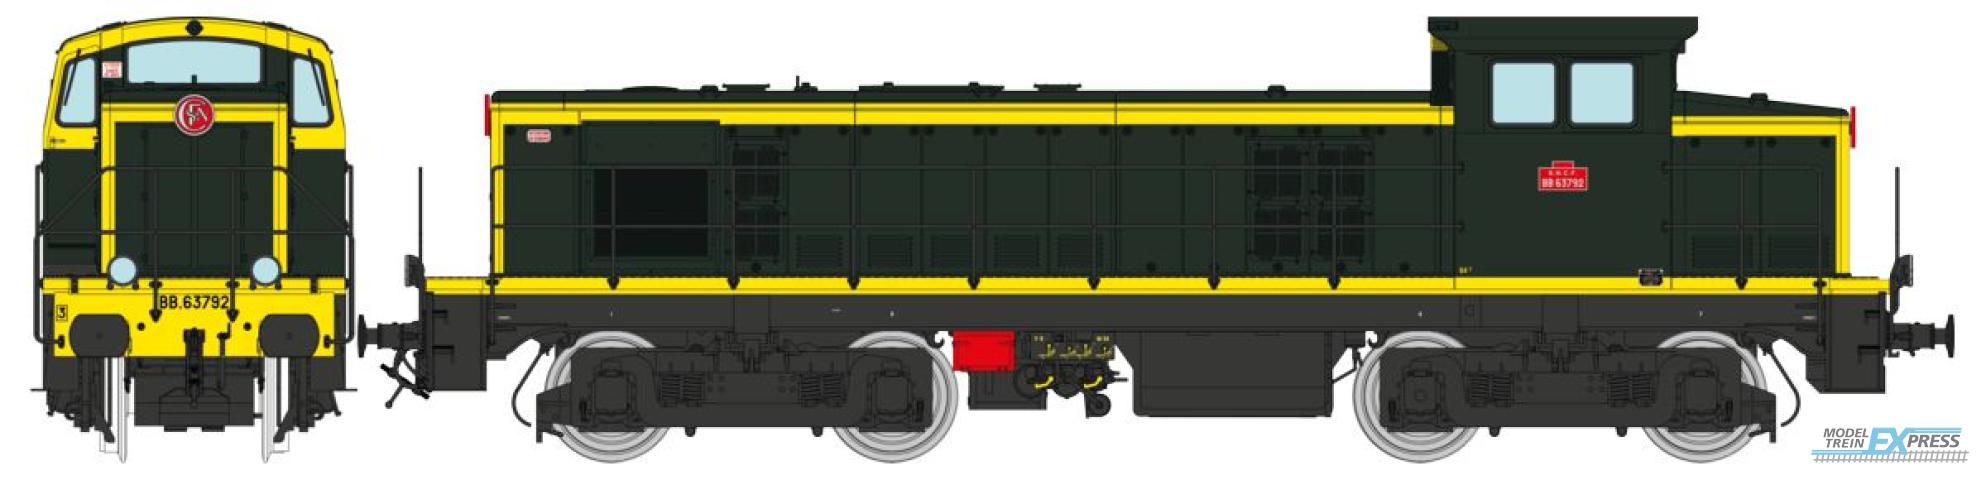 REE models JM-008S Diesel Locomotive BB 63792 green/yellow 401 black frame, West, Era  III - DCC SOUND